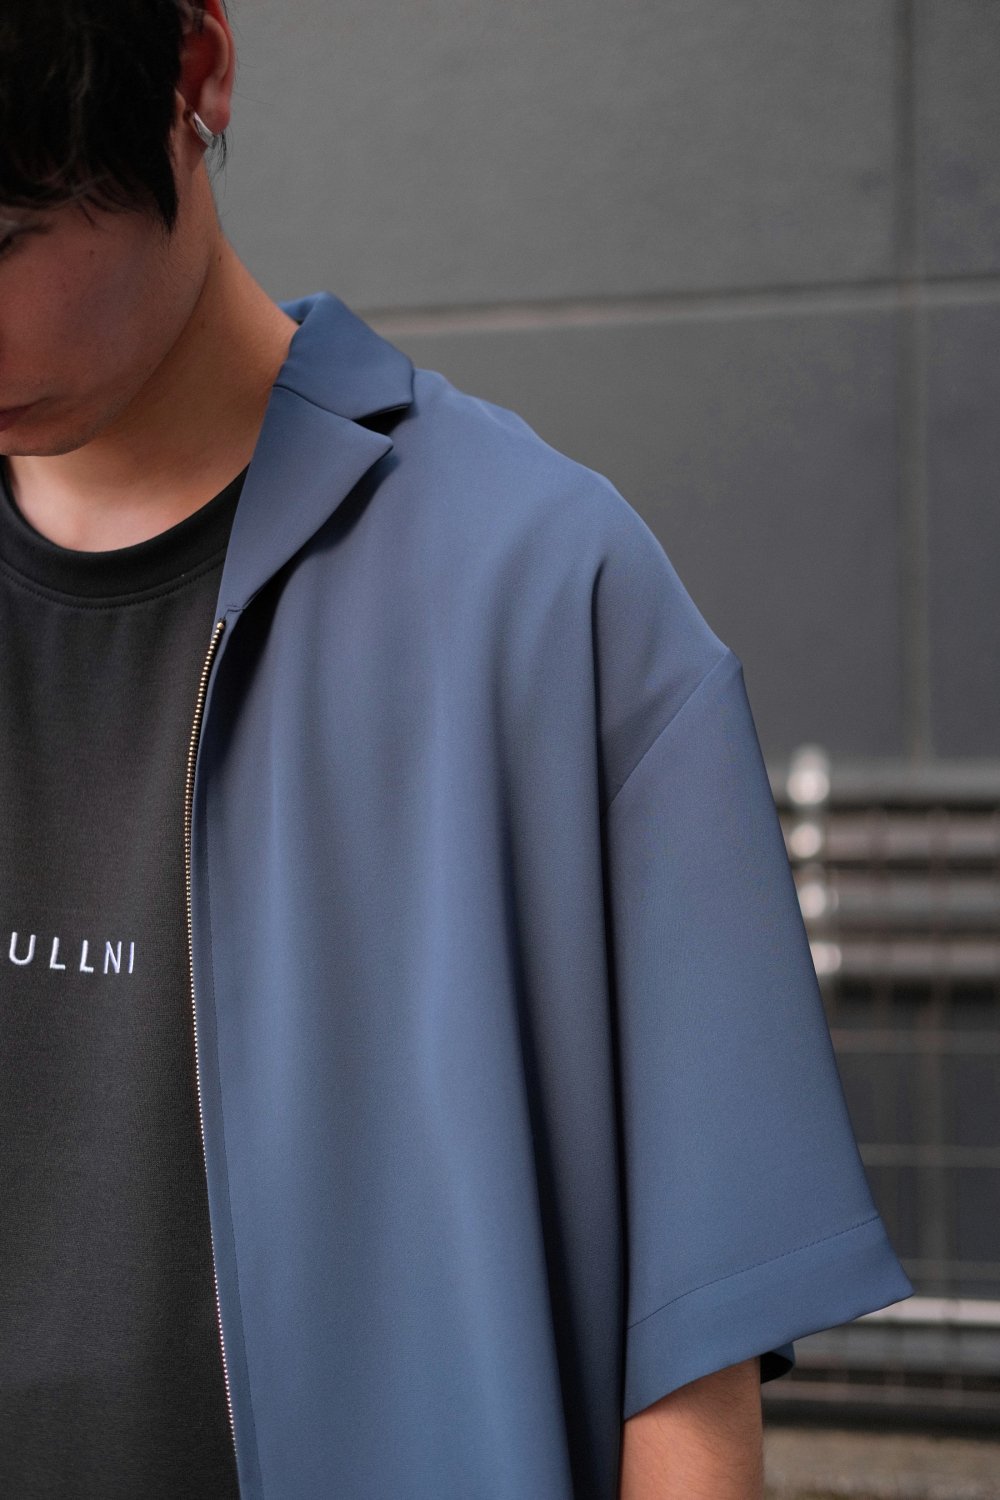 CULLNI [クルニ] Double Satin Mini Tailored Zip Short Sleeve Shirt 